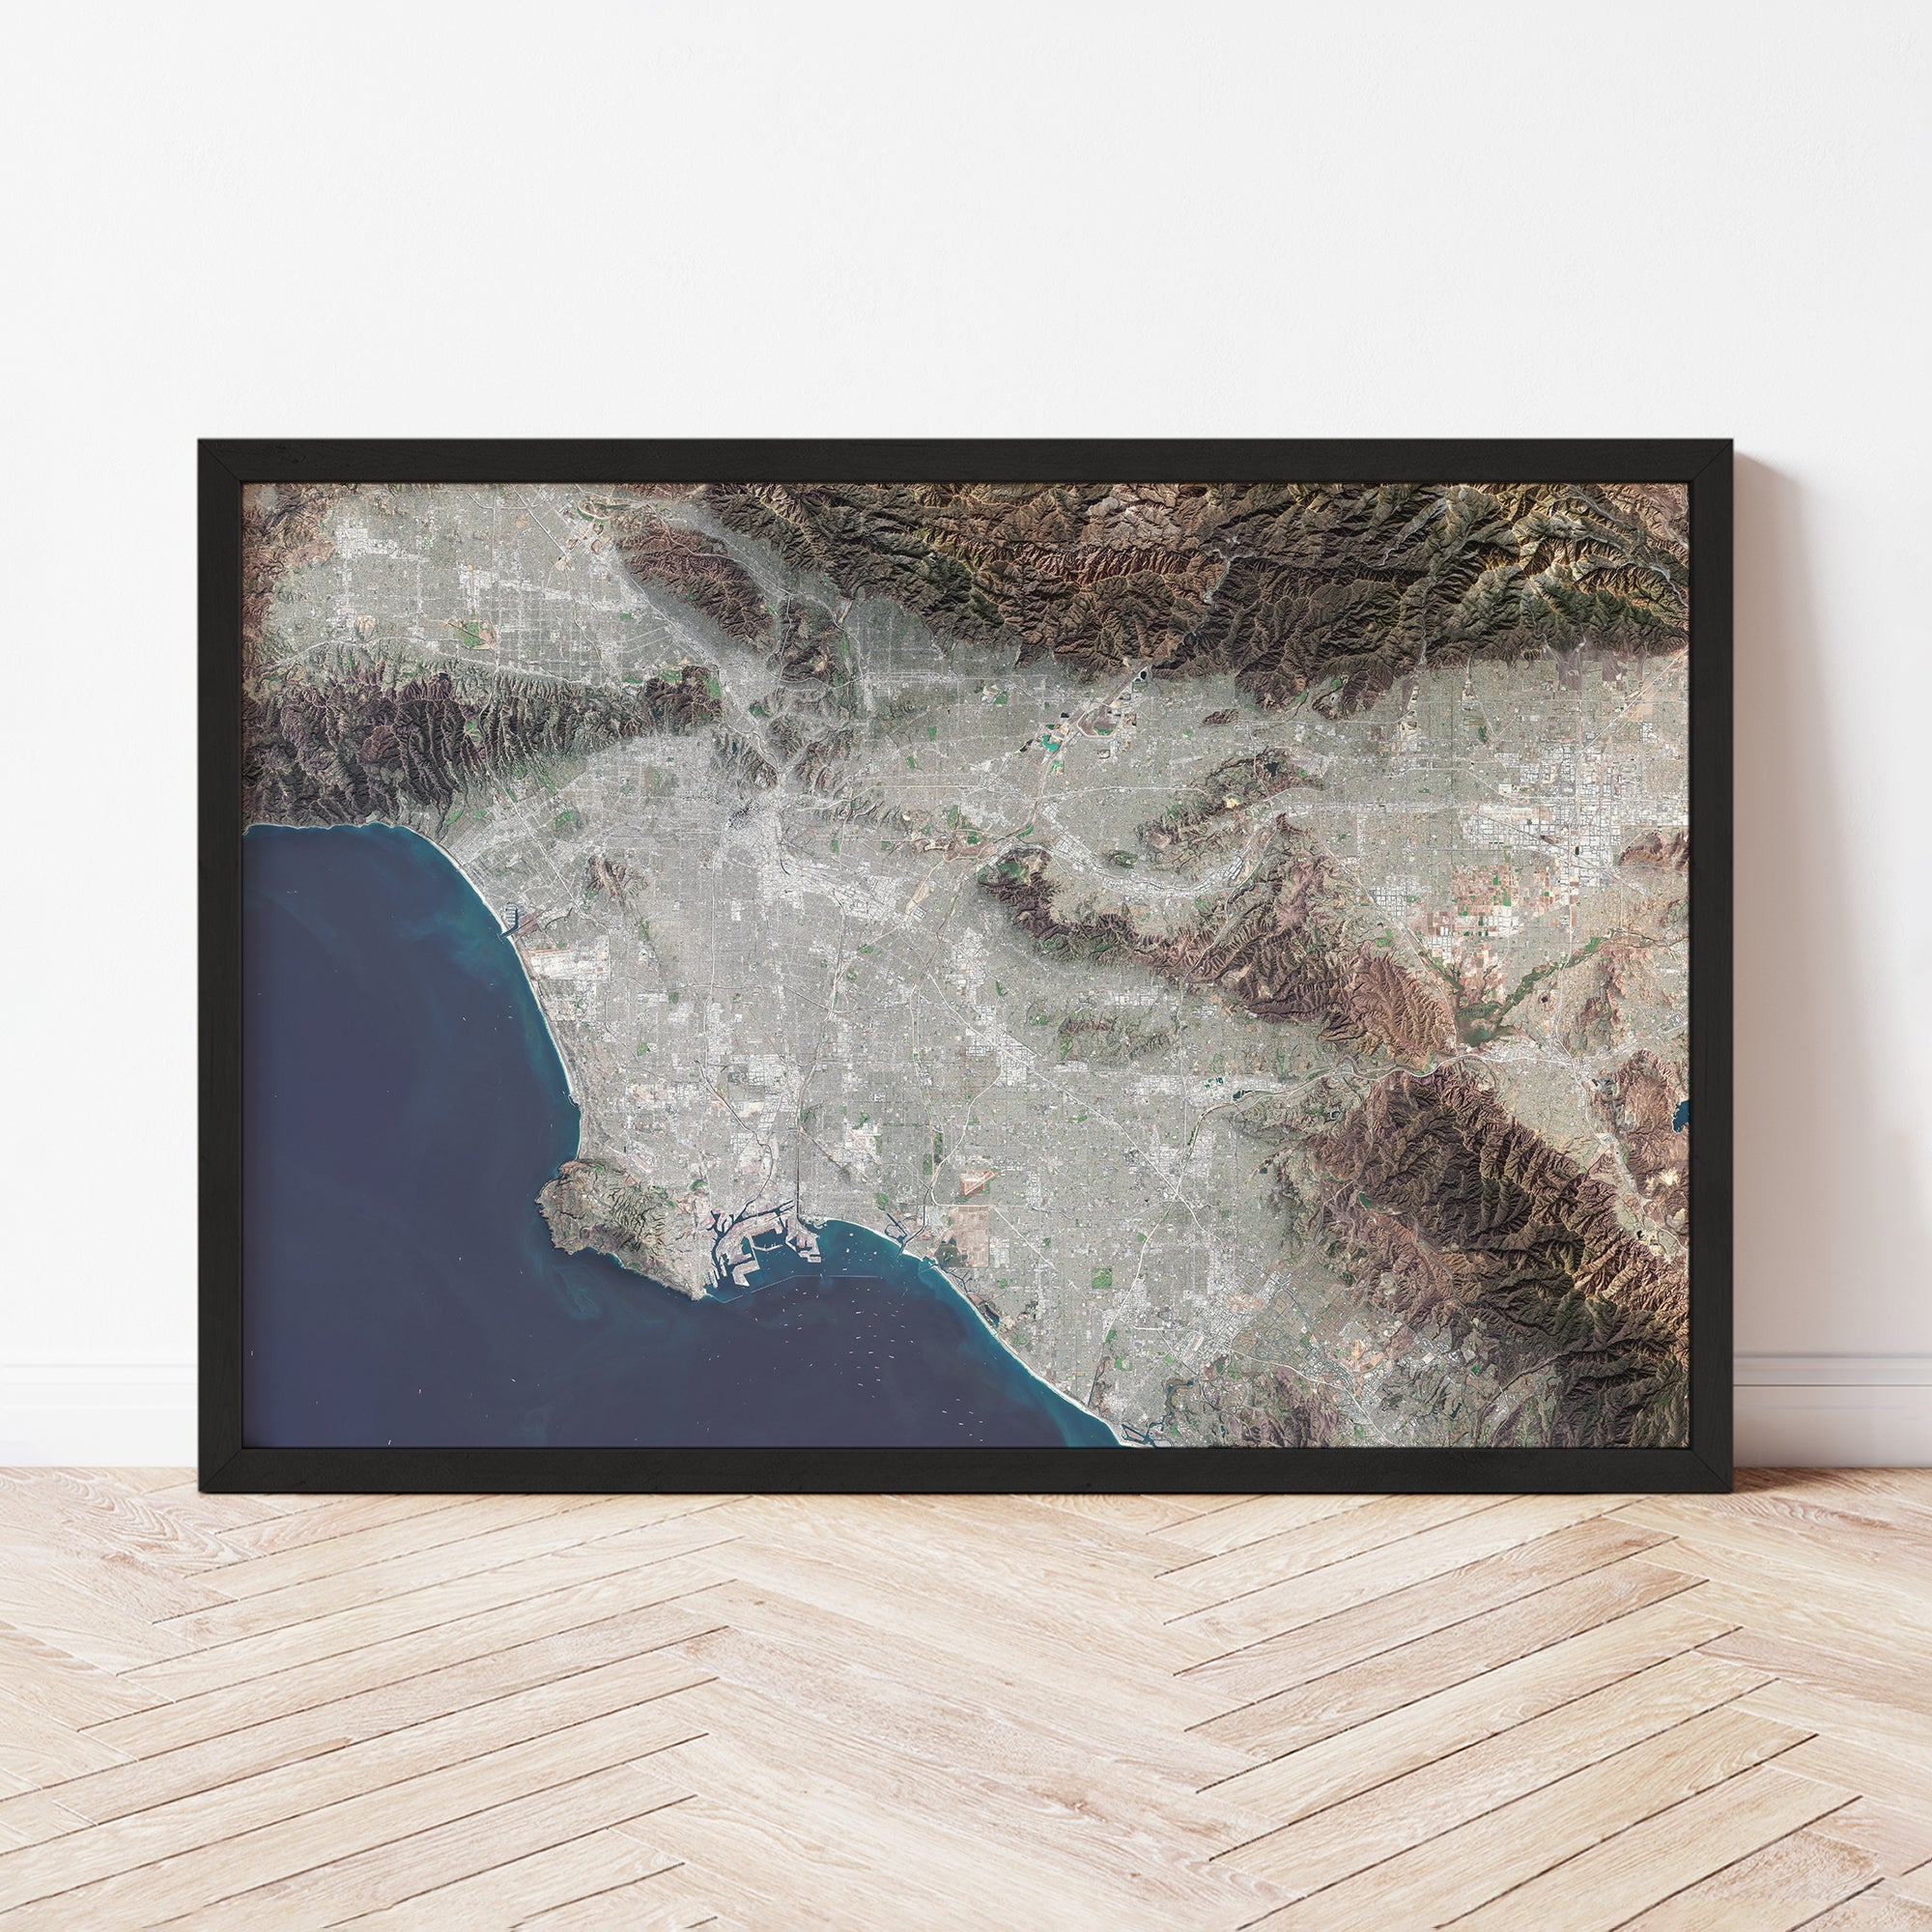 Los Angeles - Satellite Imagery